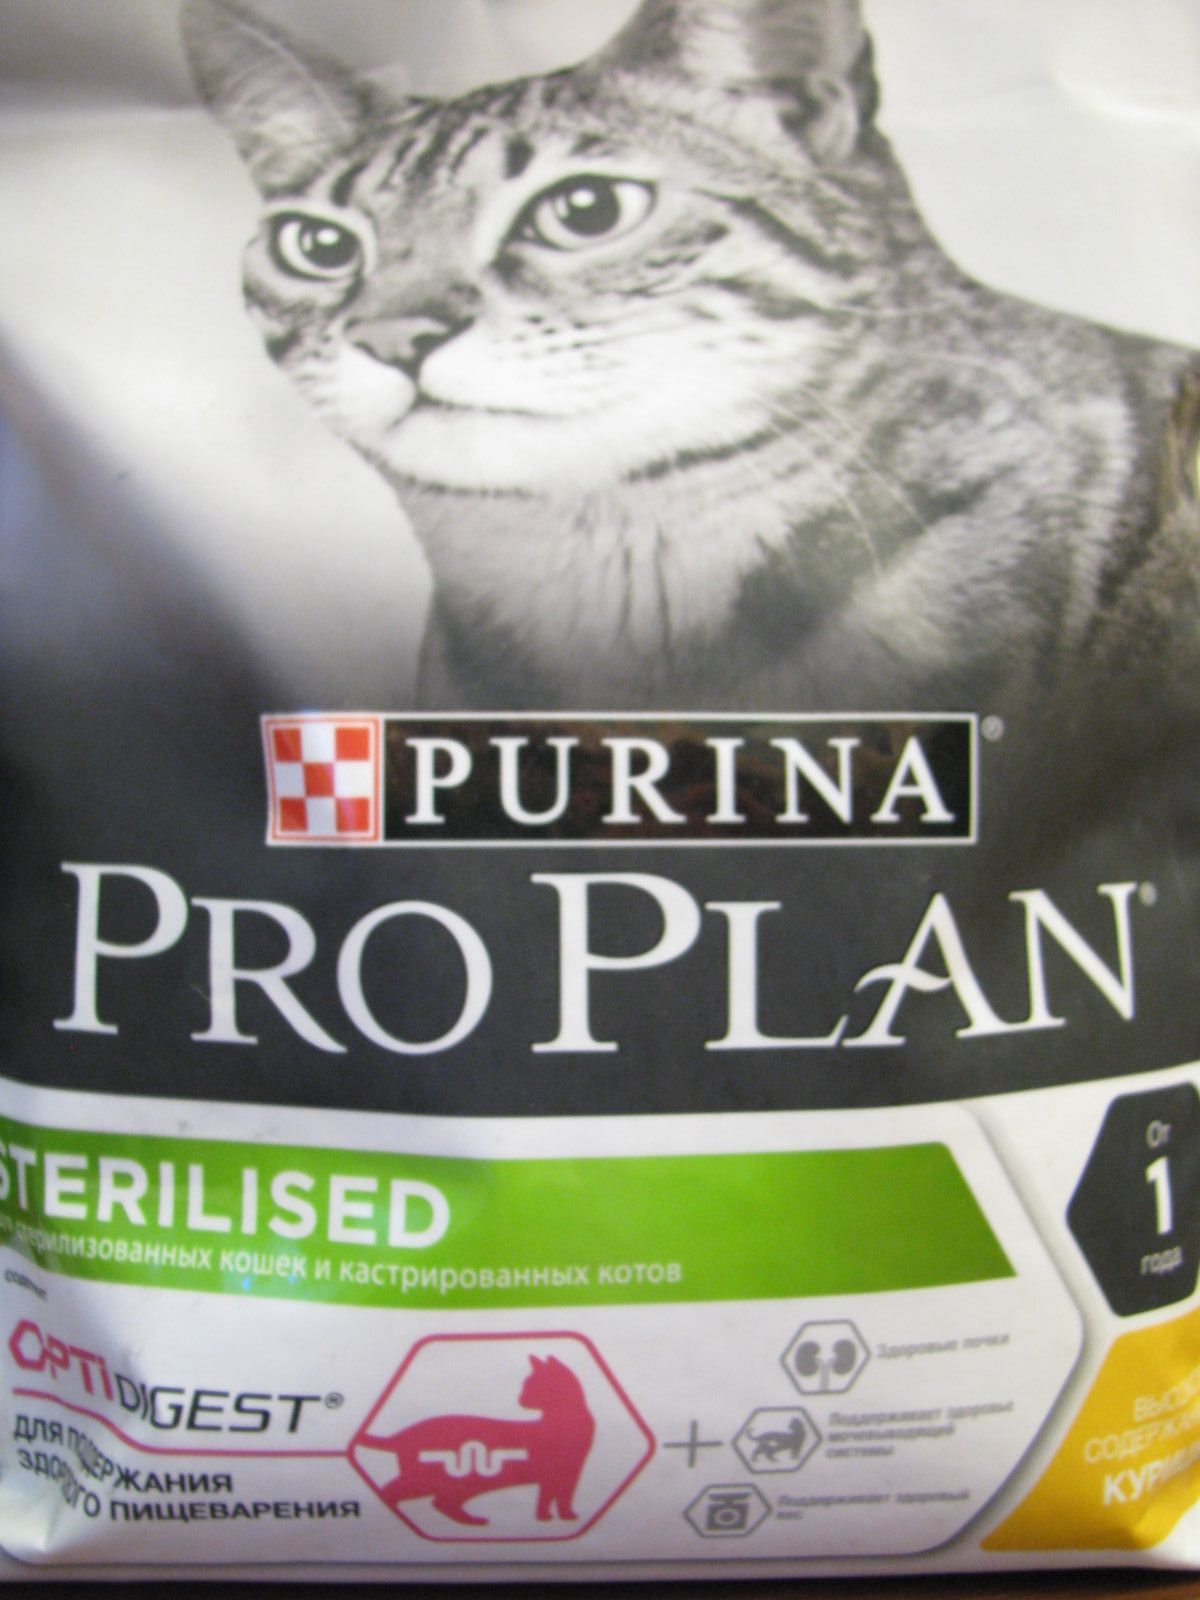 Pro plan для кошек 1.5 кг. Проплан для кошек стерилизованных 1.5 кг. Корм Проплан для кошек 1.5 кг. Корм для кошек Проплан для стерилизованных. Сухой корм для кошек Проплан для стерилизованных кошек.